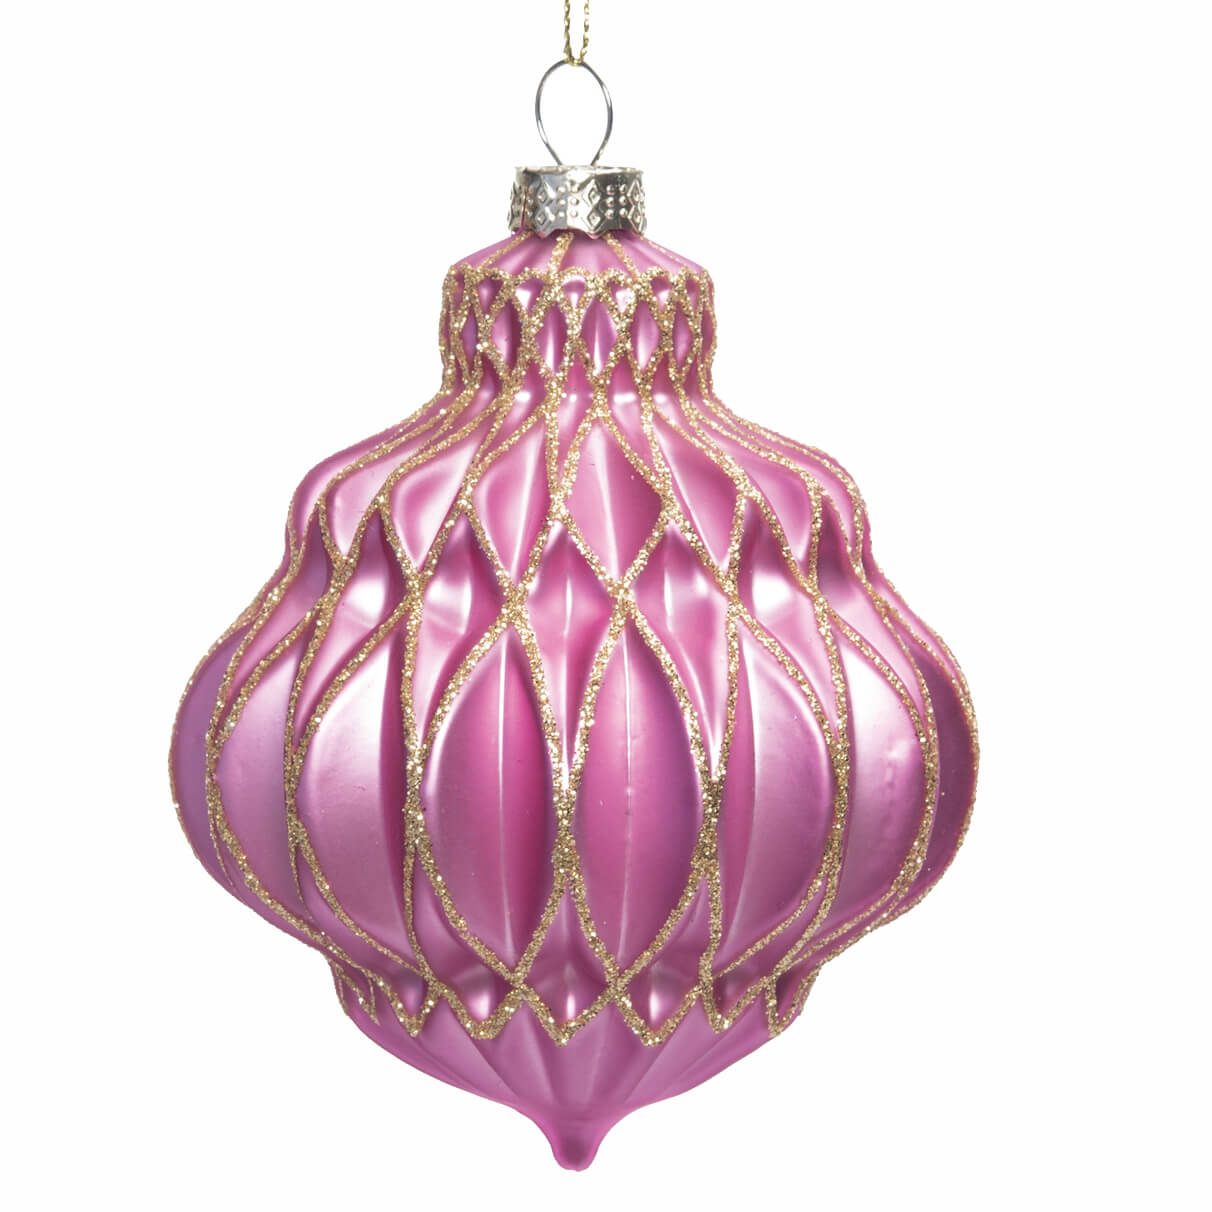 Bright Pink Glass Ornament